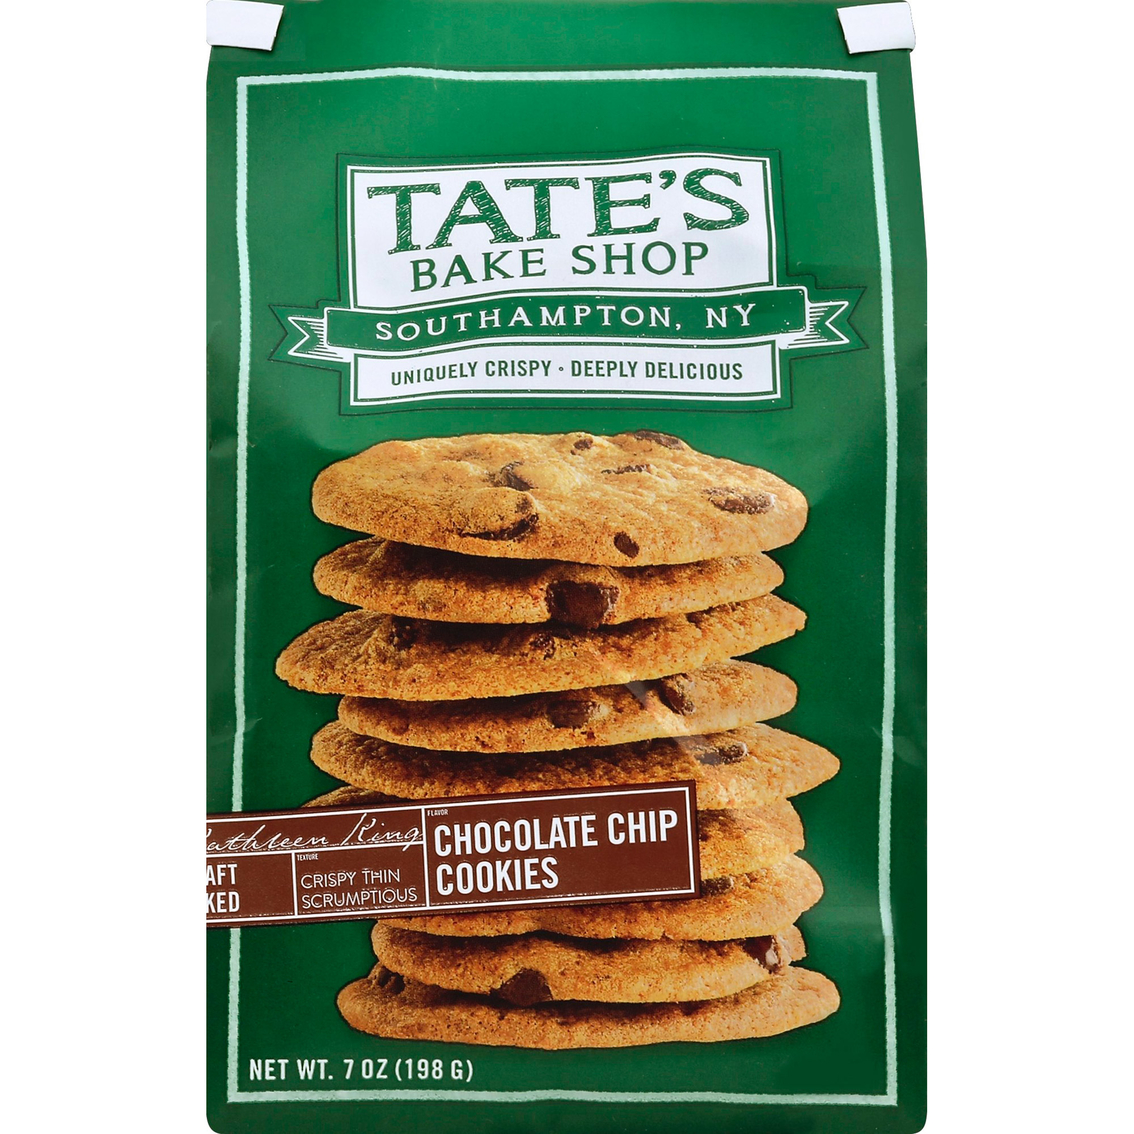 Nabisco Tate's Chocolate Chip Cookies - Image 2 of 2